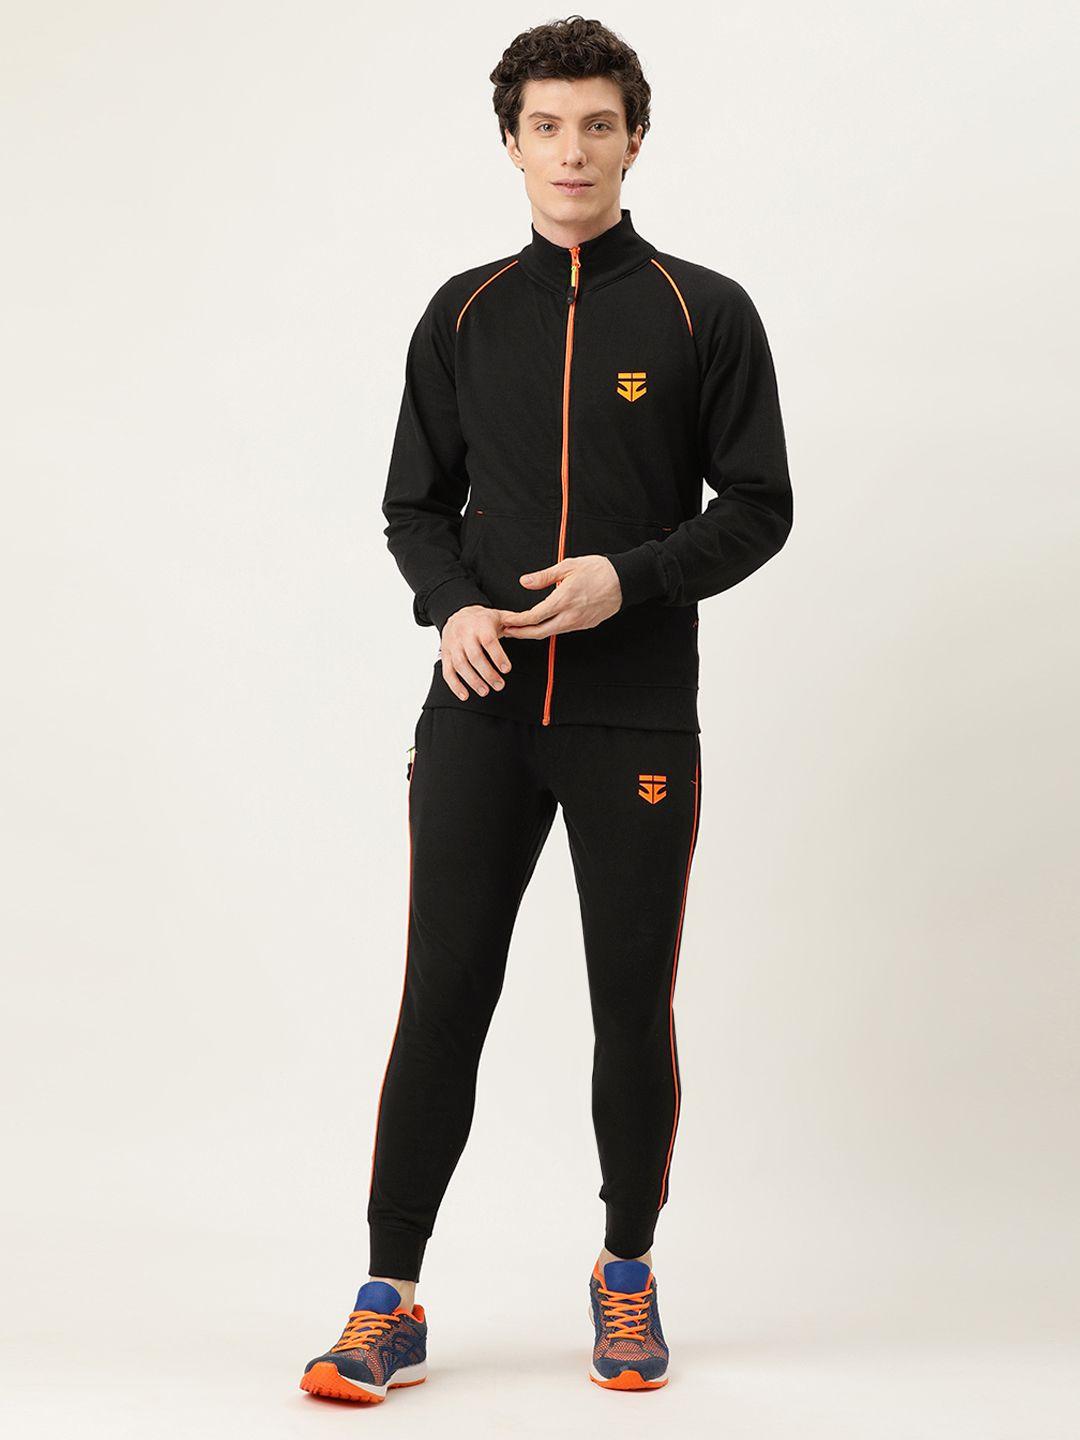 sports52 wear men black solid comfort fit tracksuits